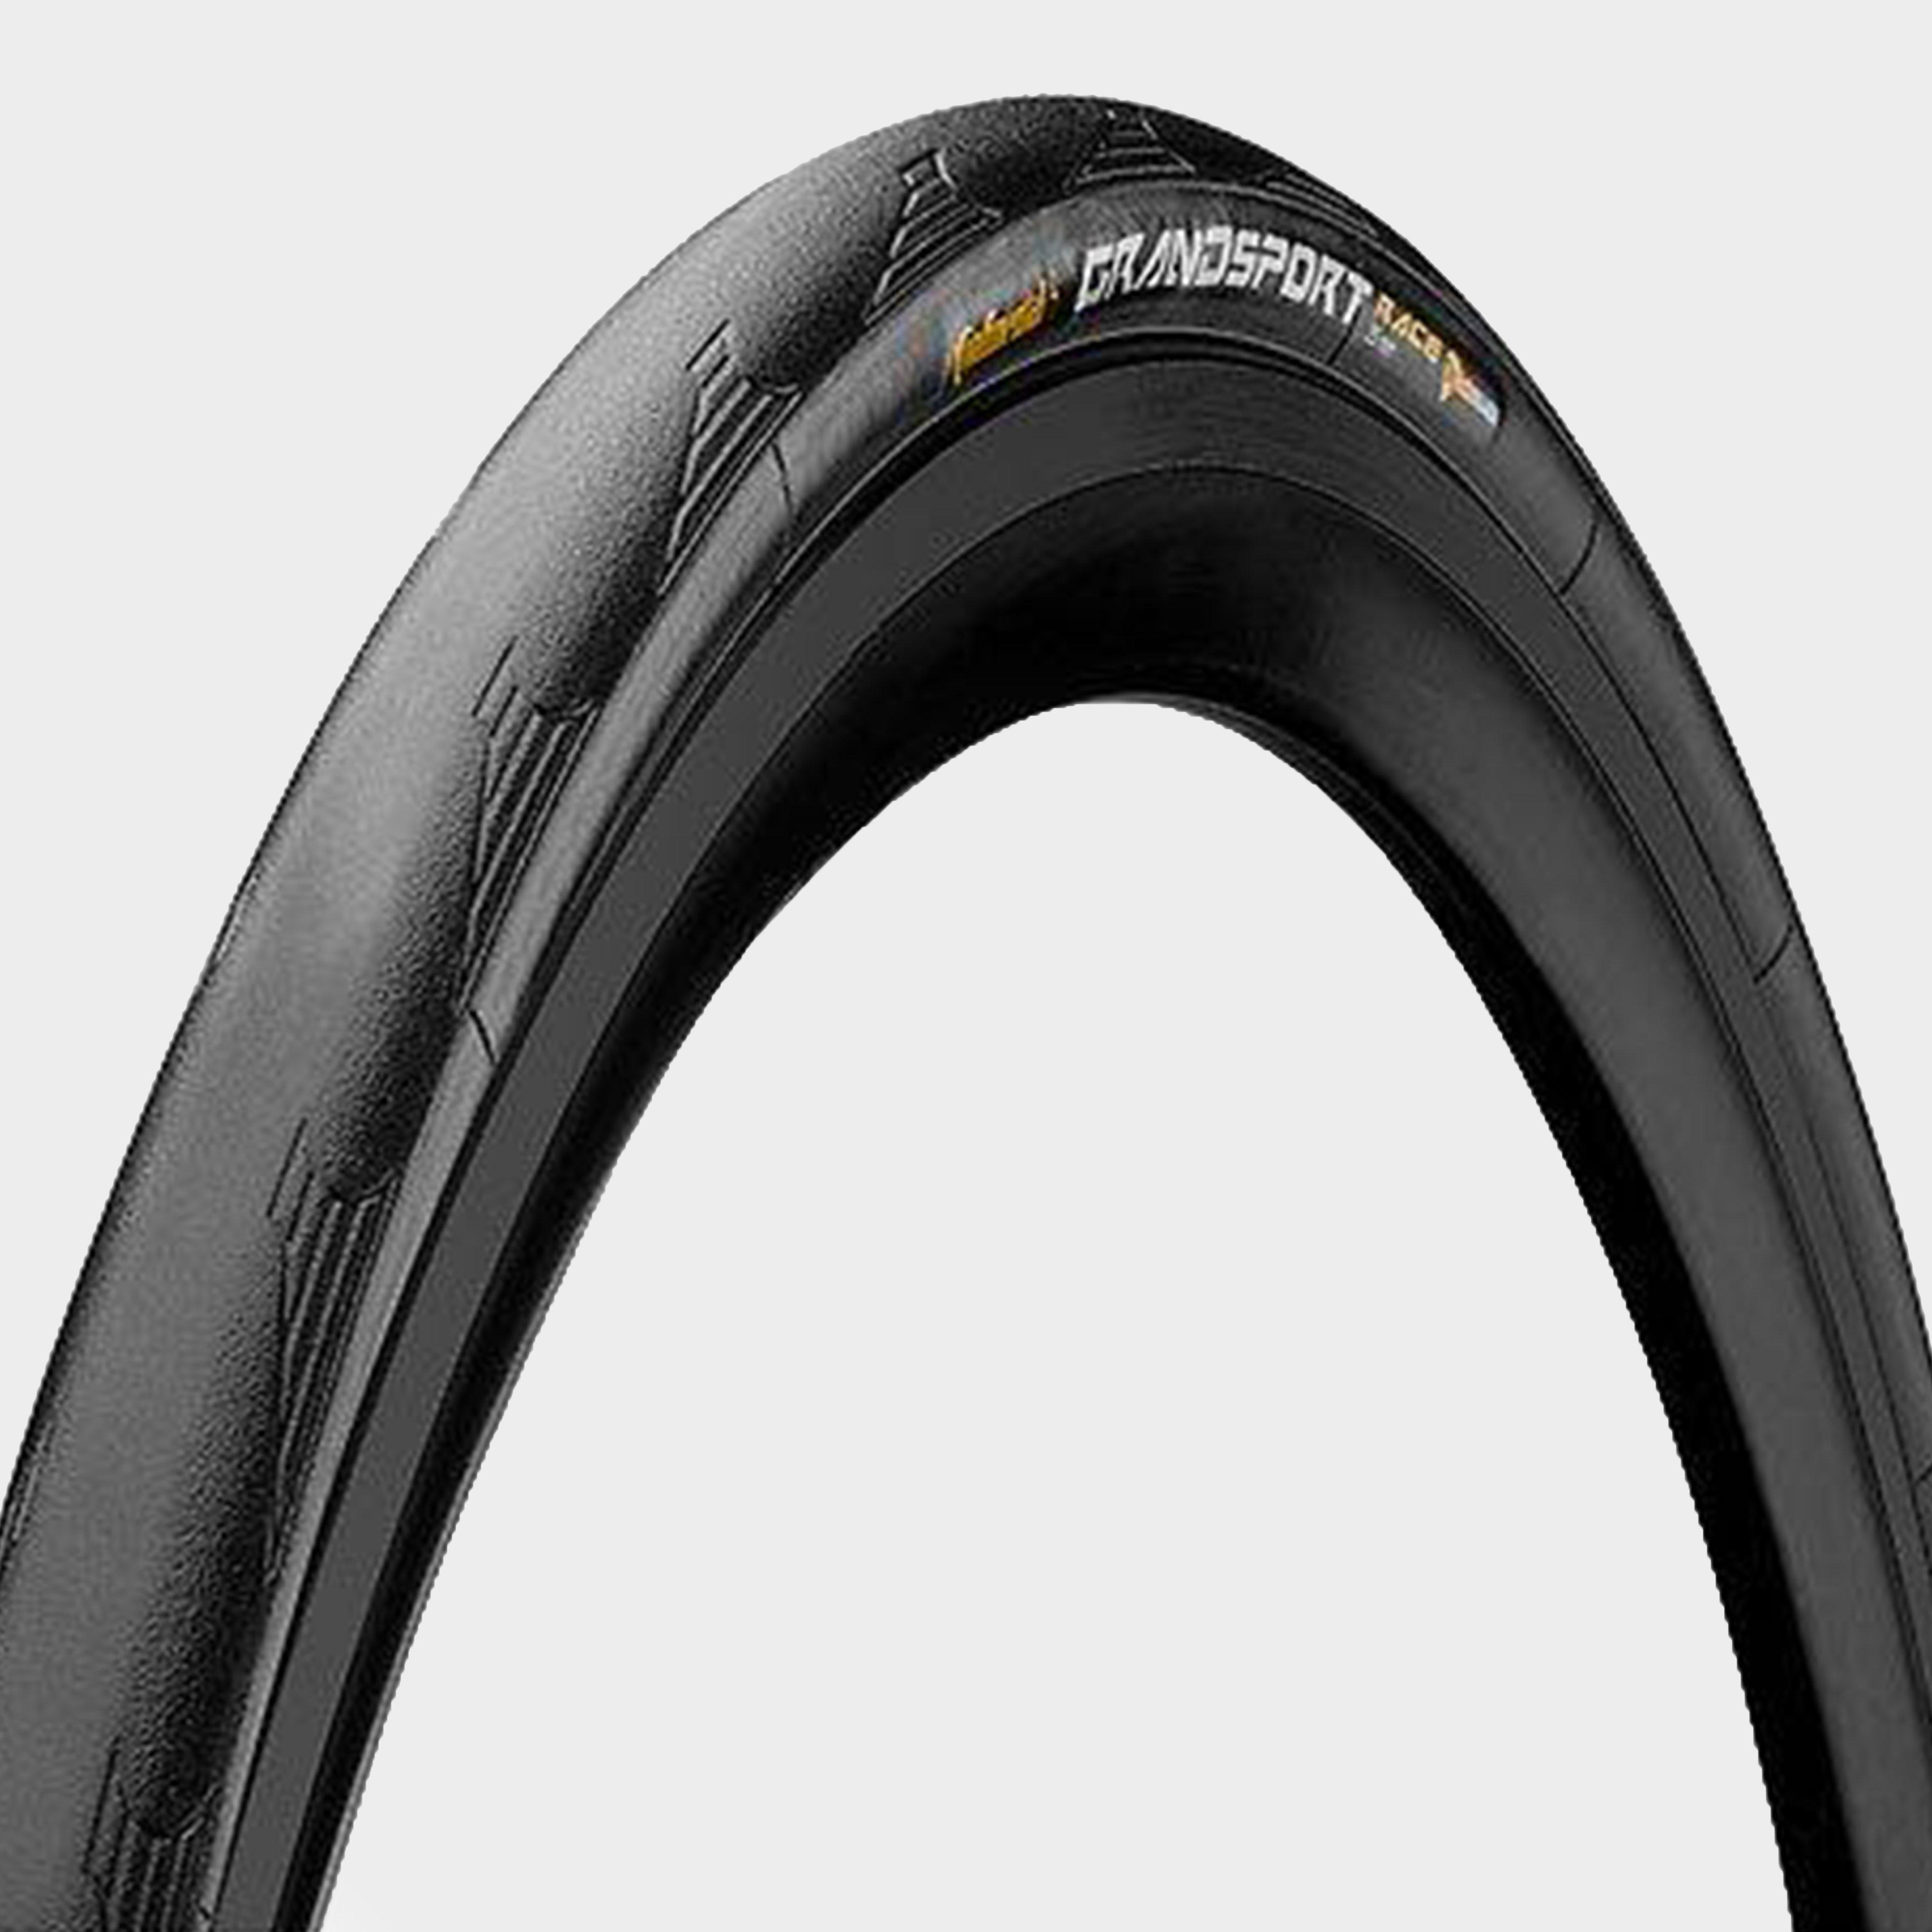 Continental Grandsport Race 700x32c Bike Tyres - Black/black  Black/black